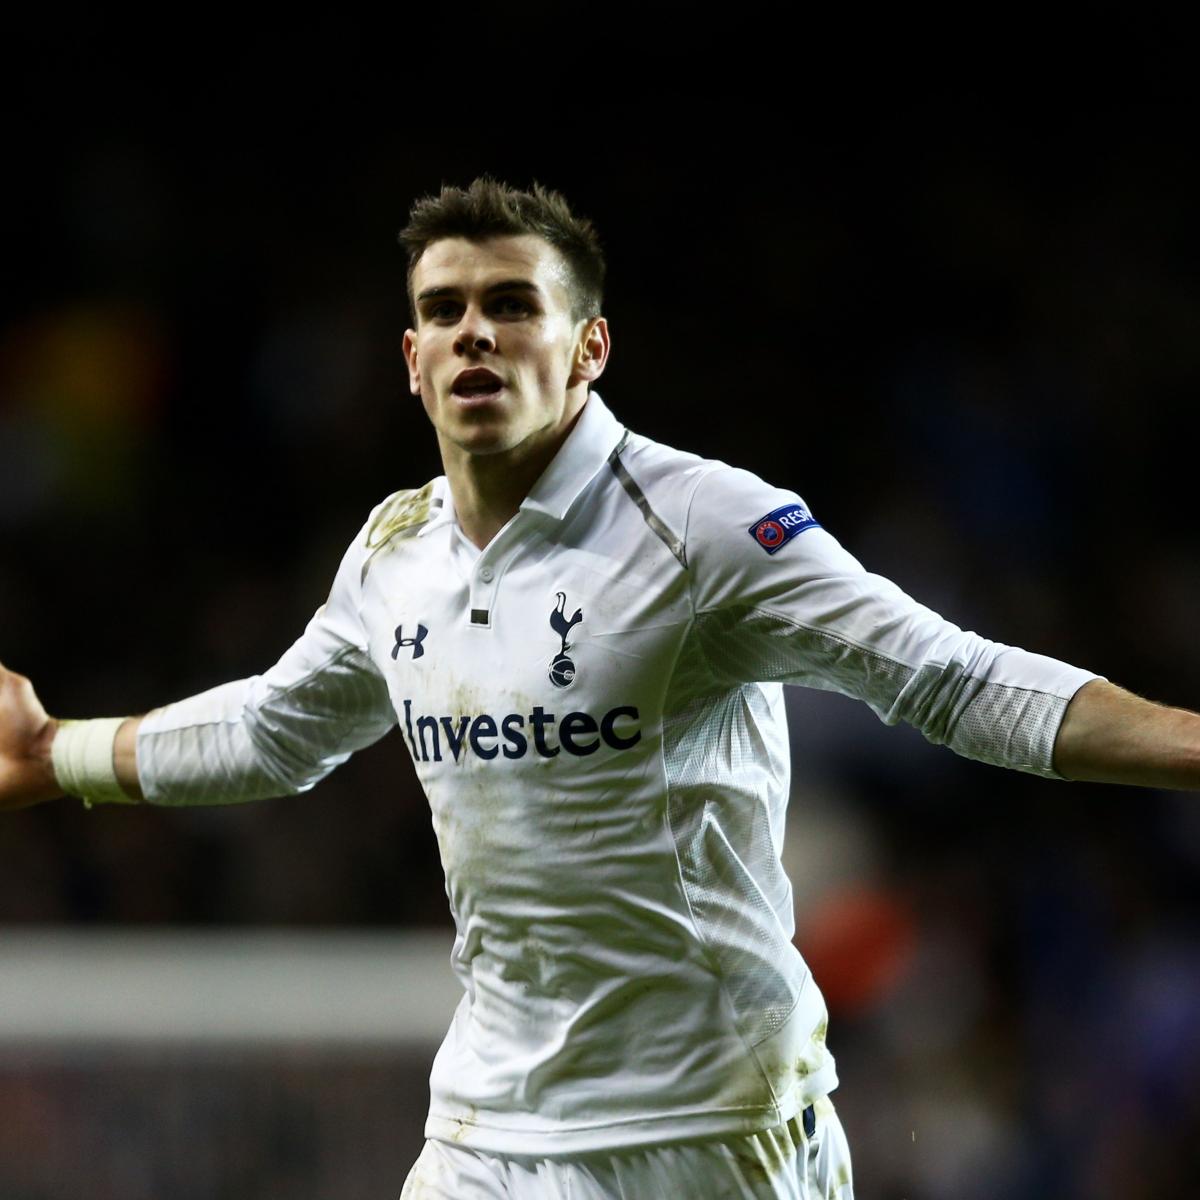 Gareth Bale - Stats and titles won